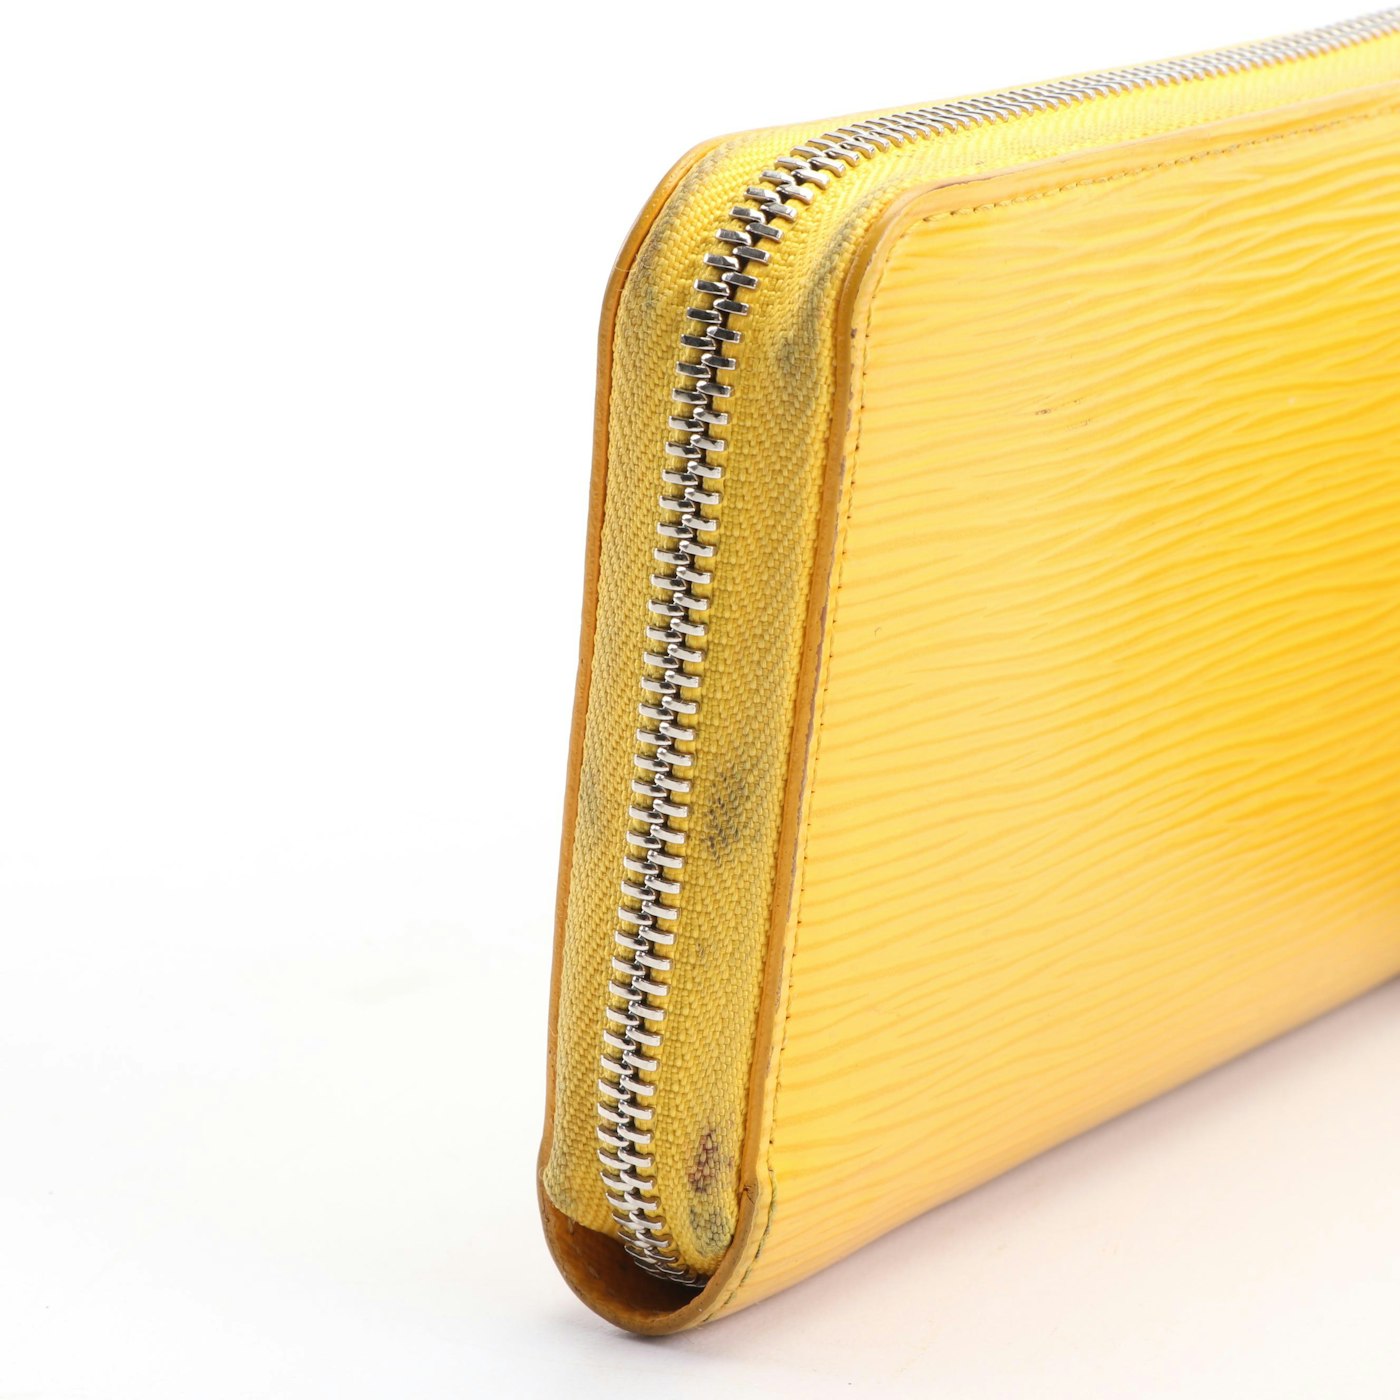 Louis Vuitton Paris Mimosa Yellow Epi Leather Wallet, Made in Spain, 2013 | EBTH